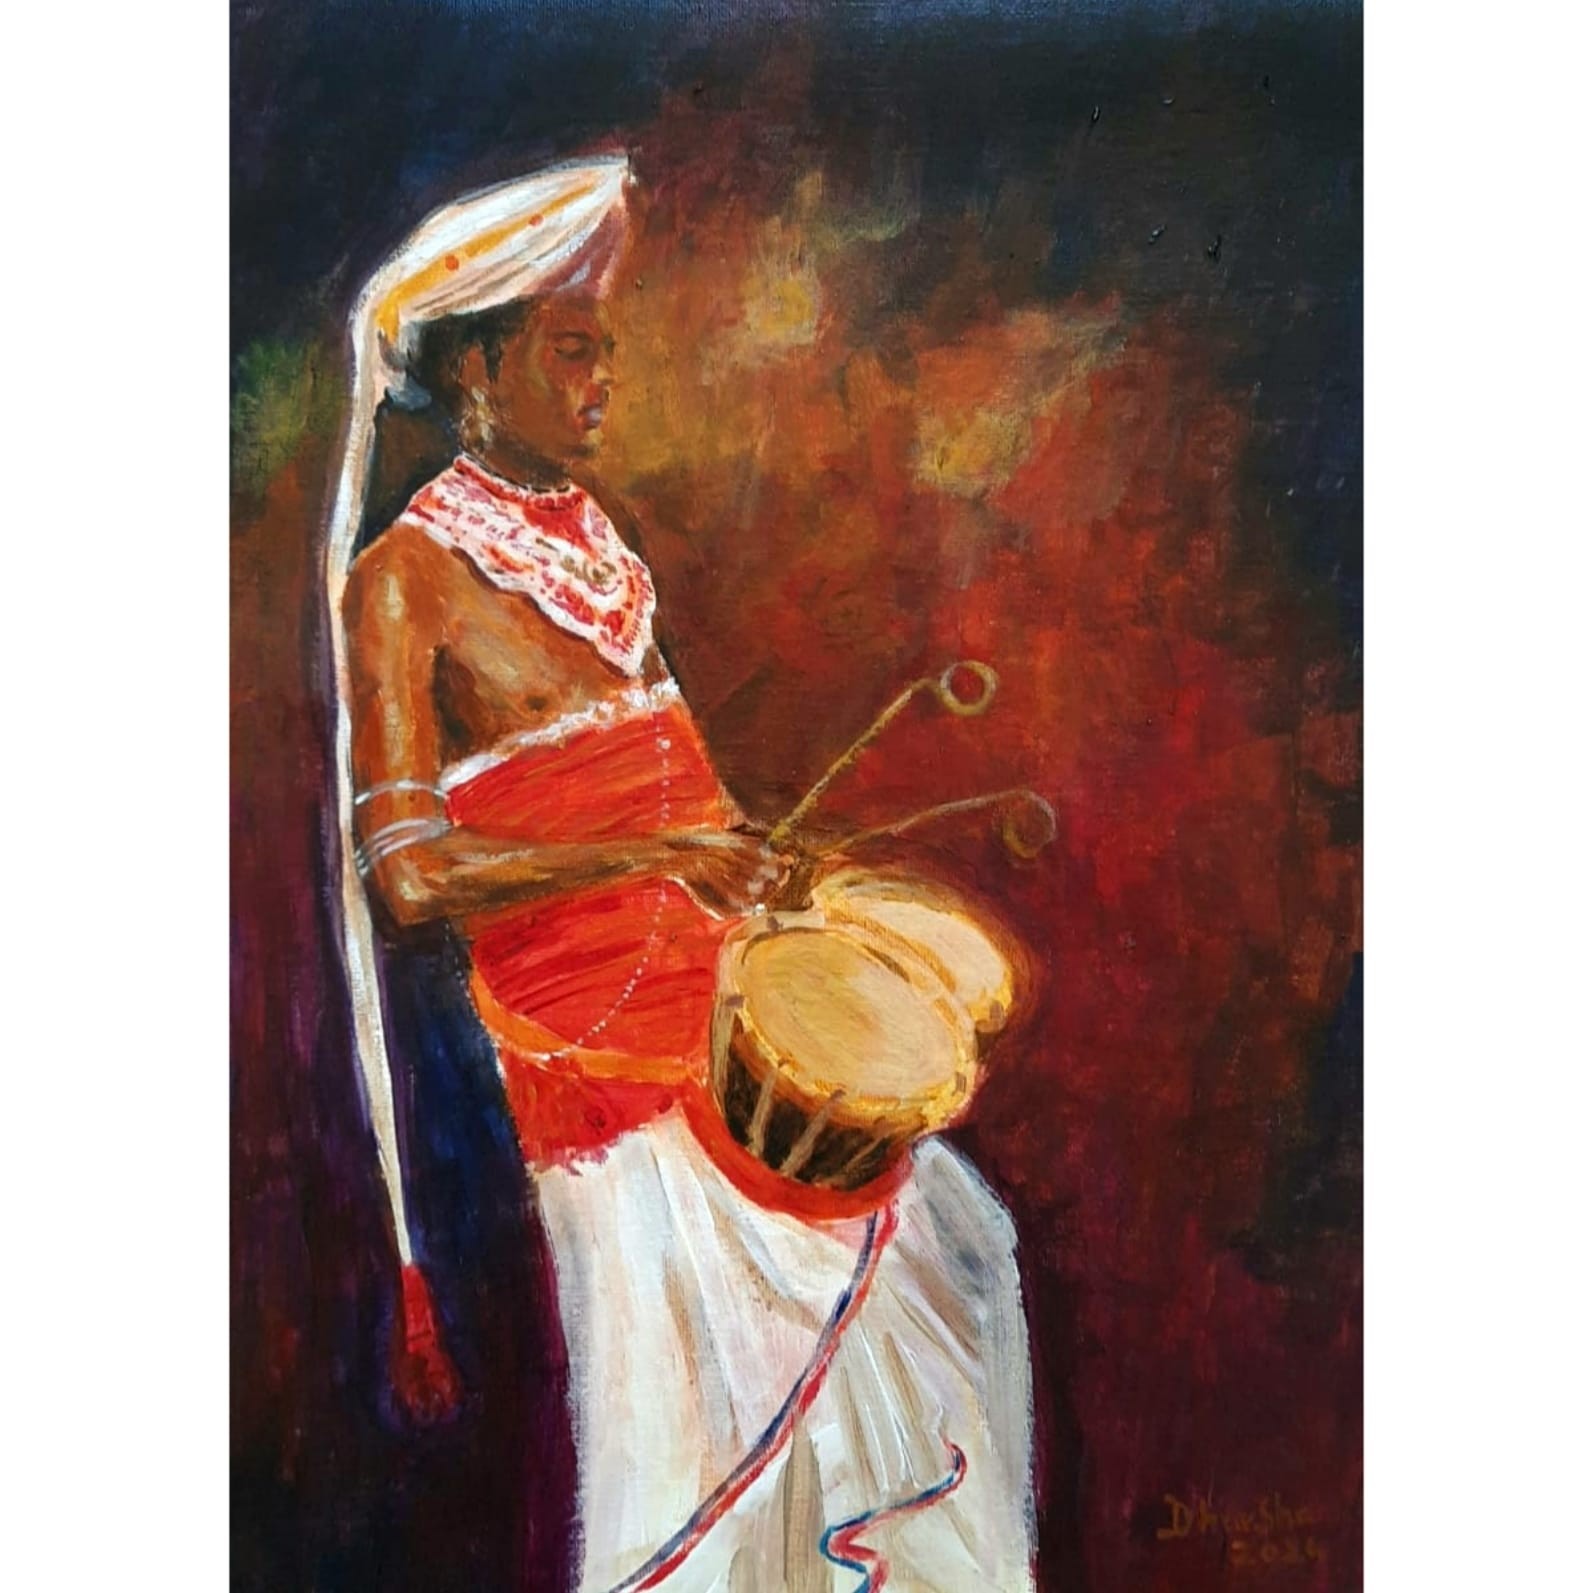 The beat of the drum by Dharsha Samarasinha